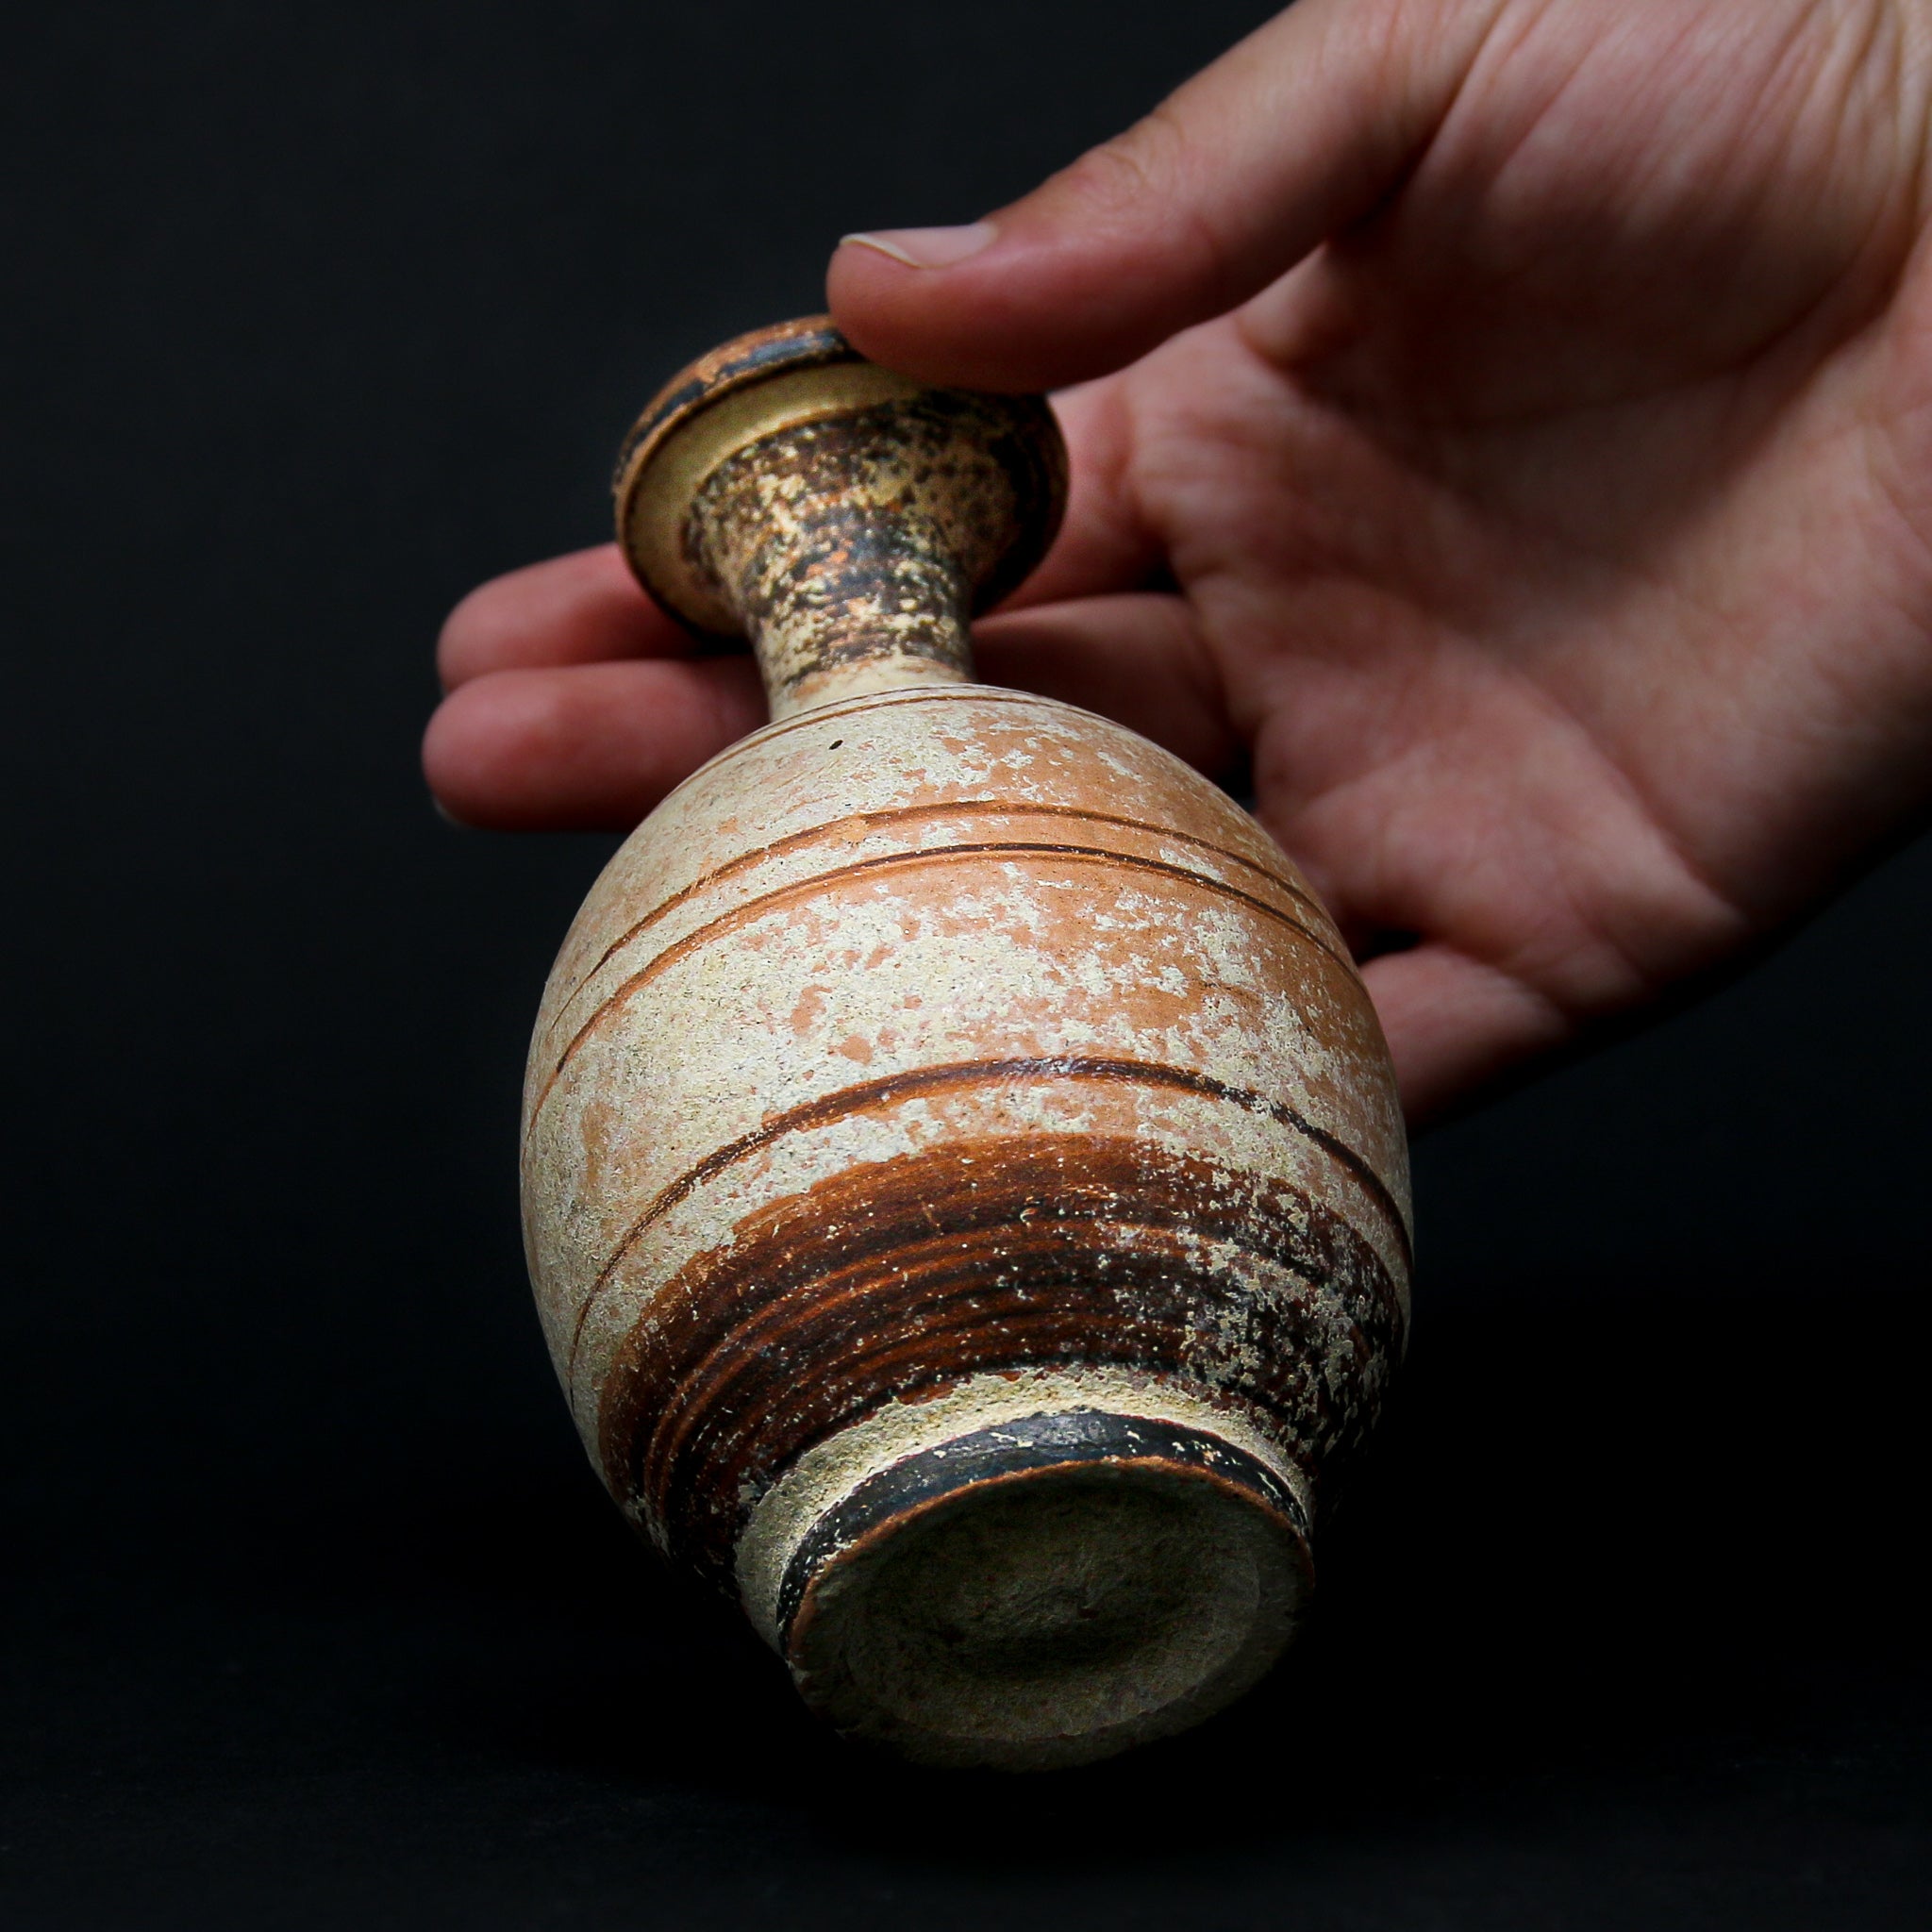 A Greek Ceramic Vessel | 5th-3rd century BC